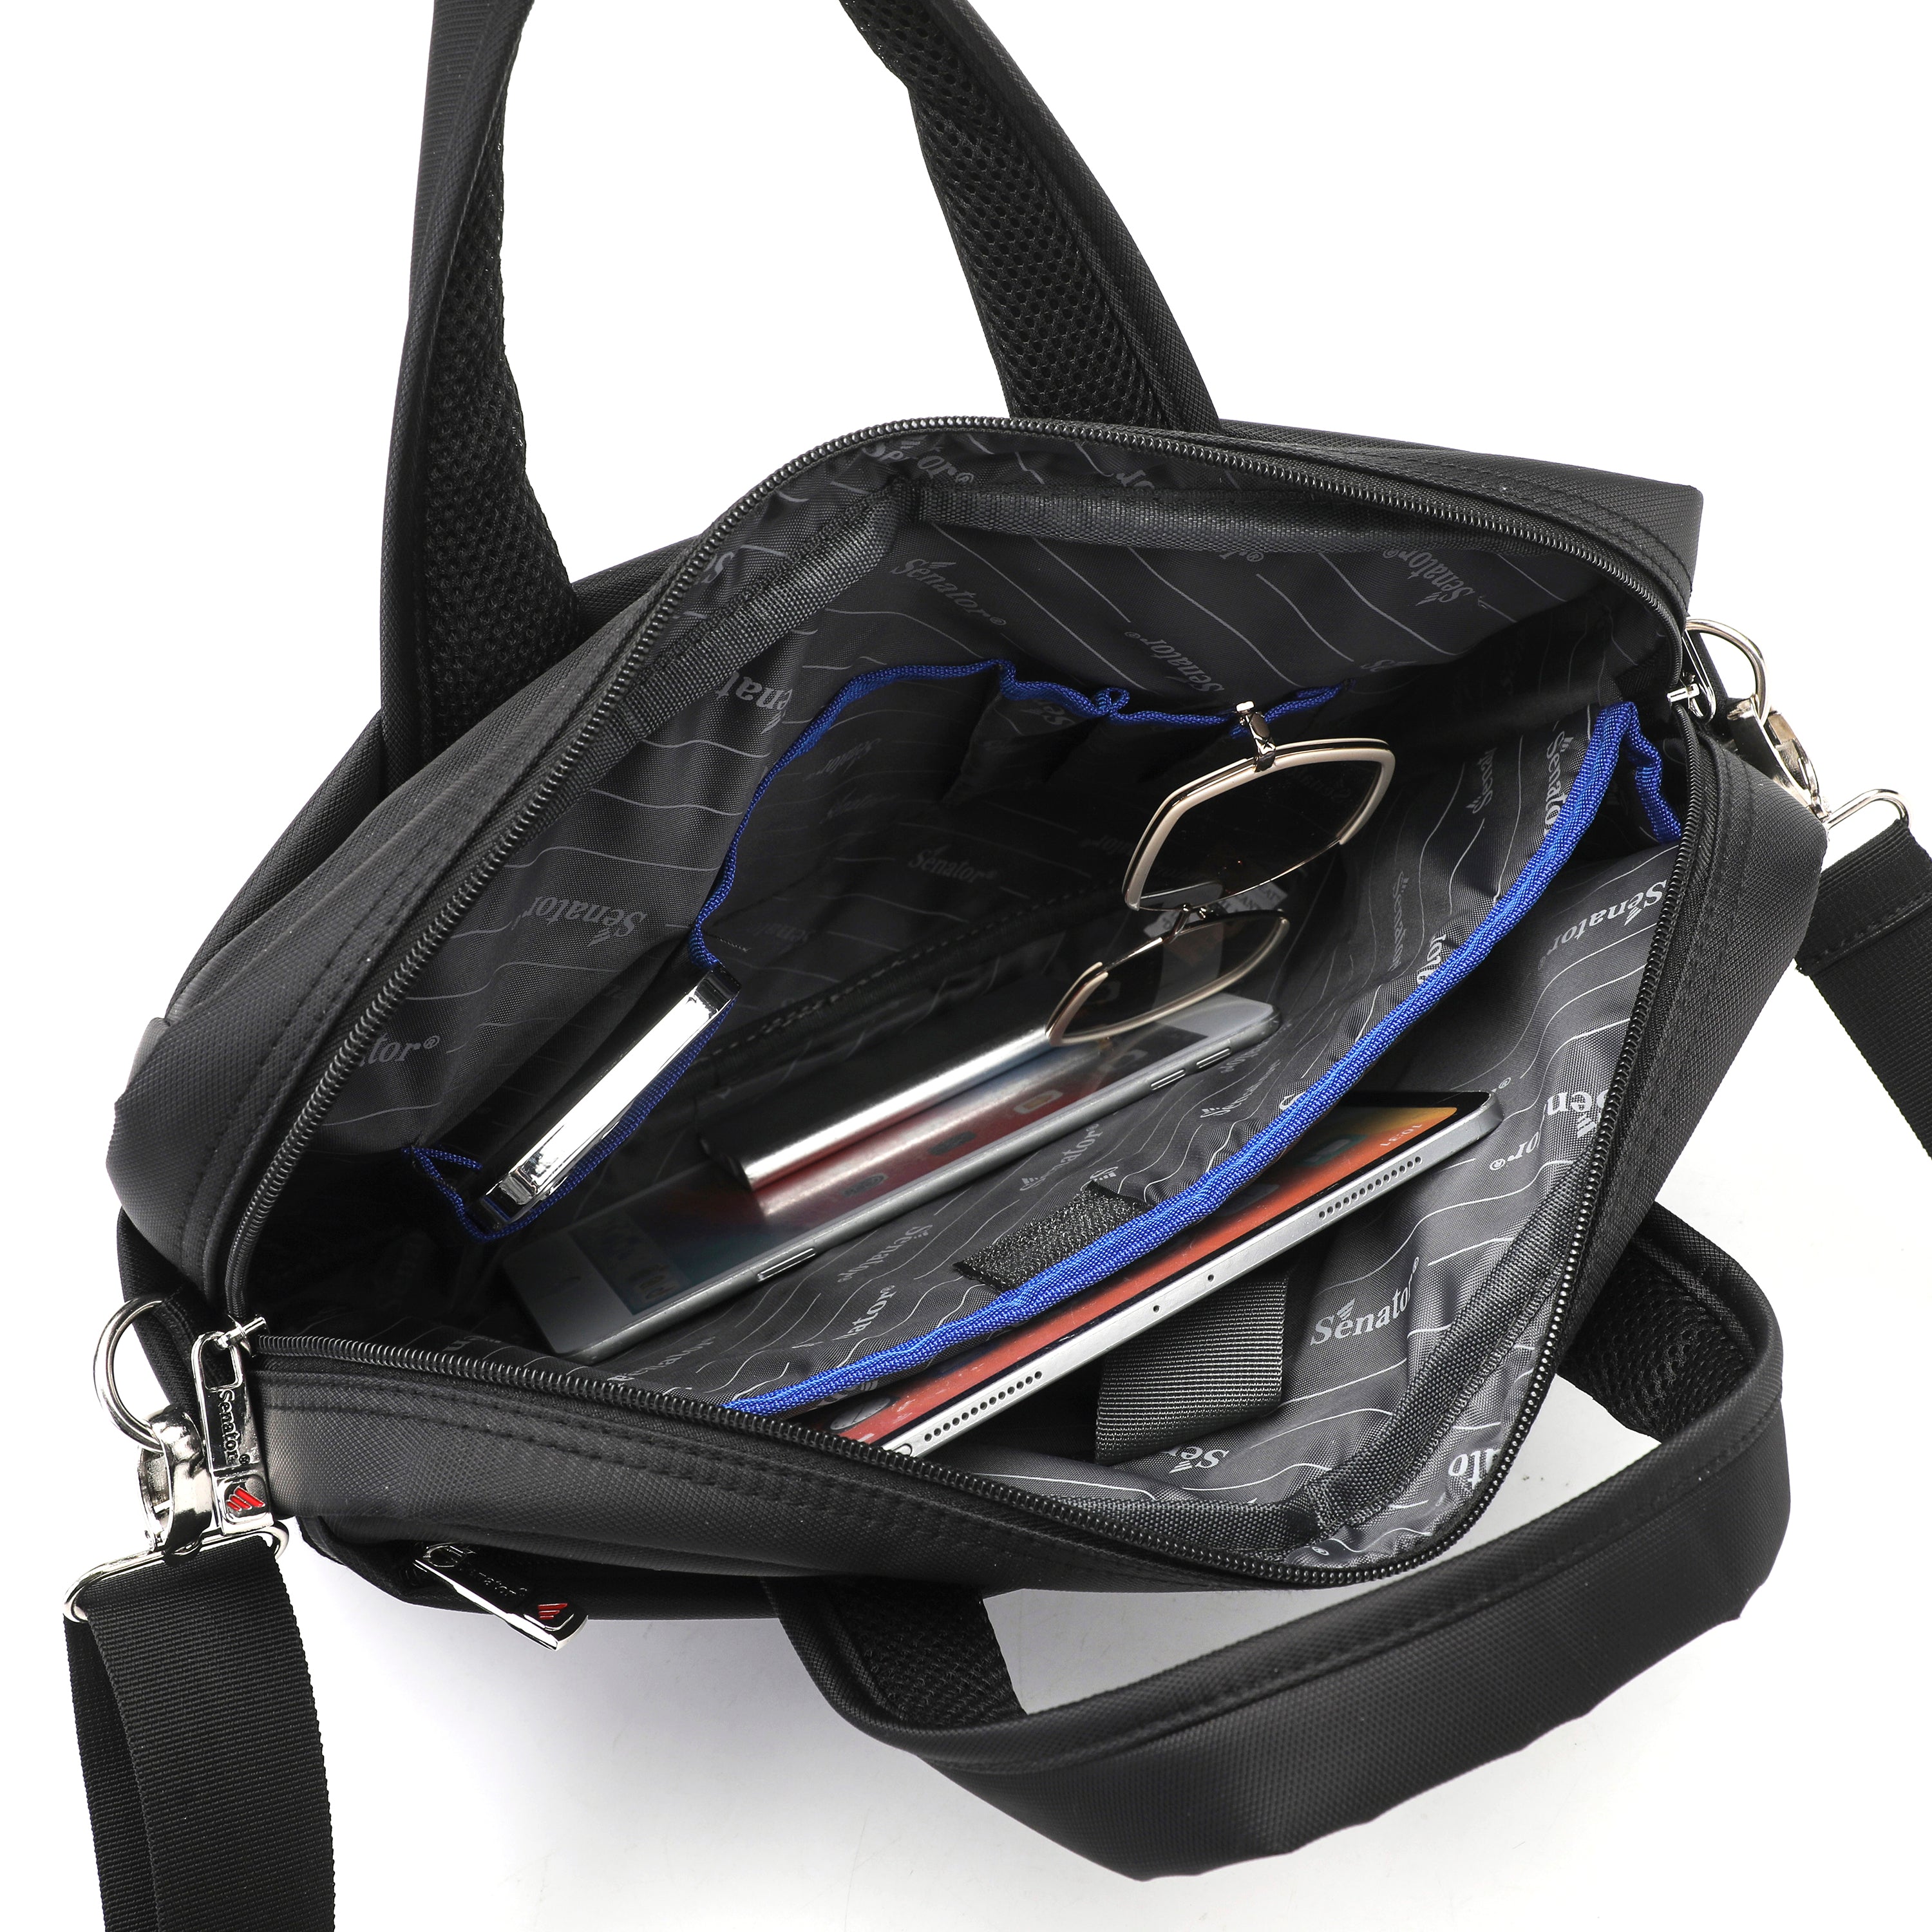 Senator 15 inch Nylon Shoulder Laptop Bag Light Weight Water Resistant with RFID pockets and Adjustable Shoulder Straps Business College School KH8115